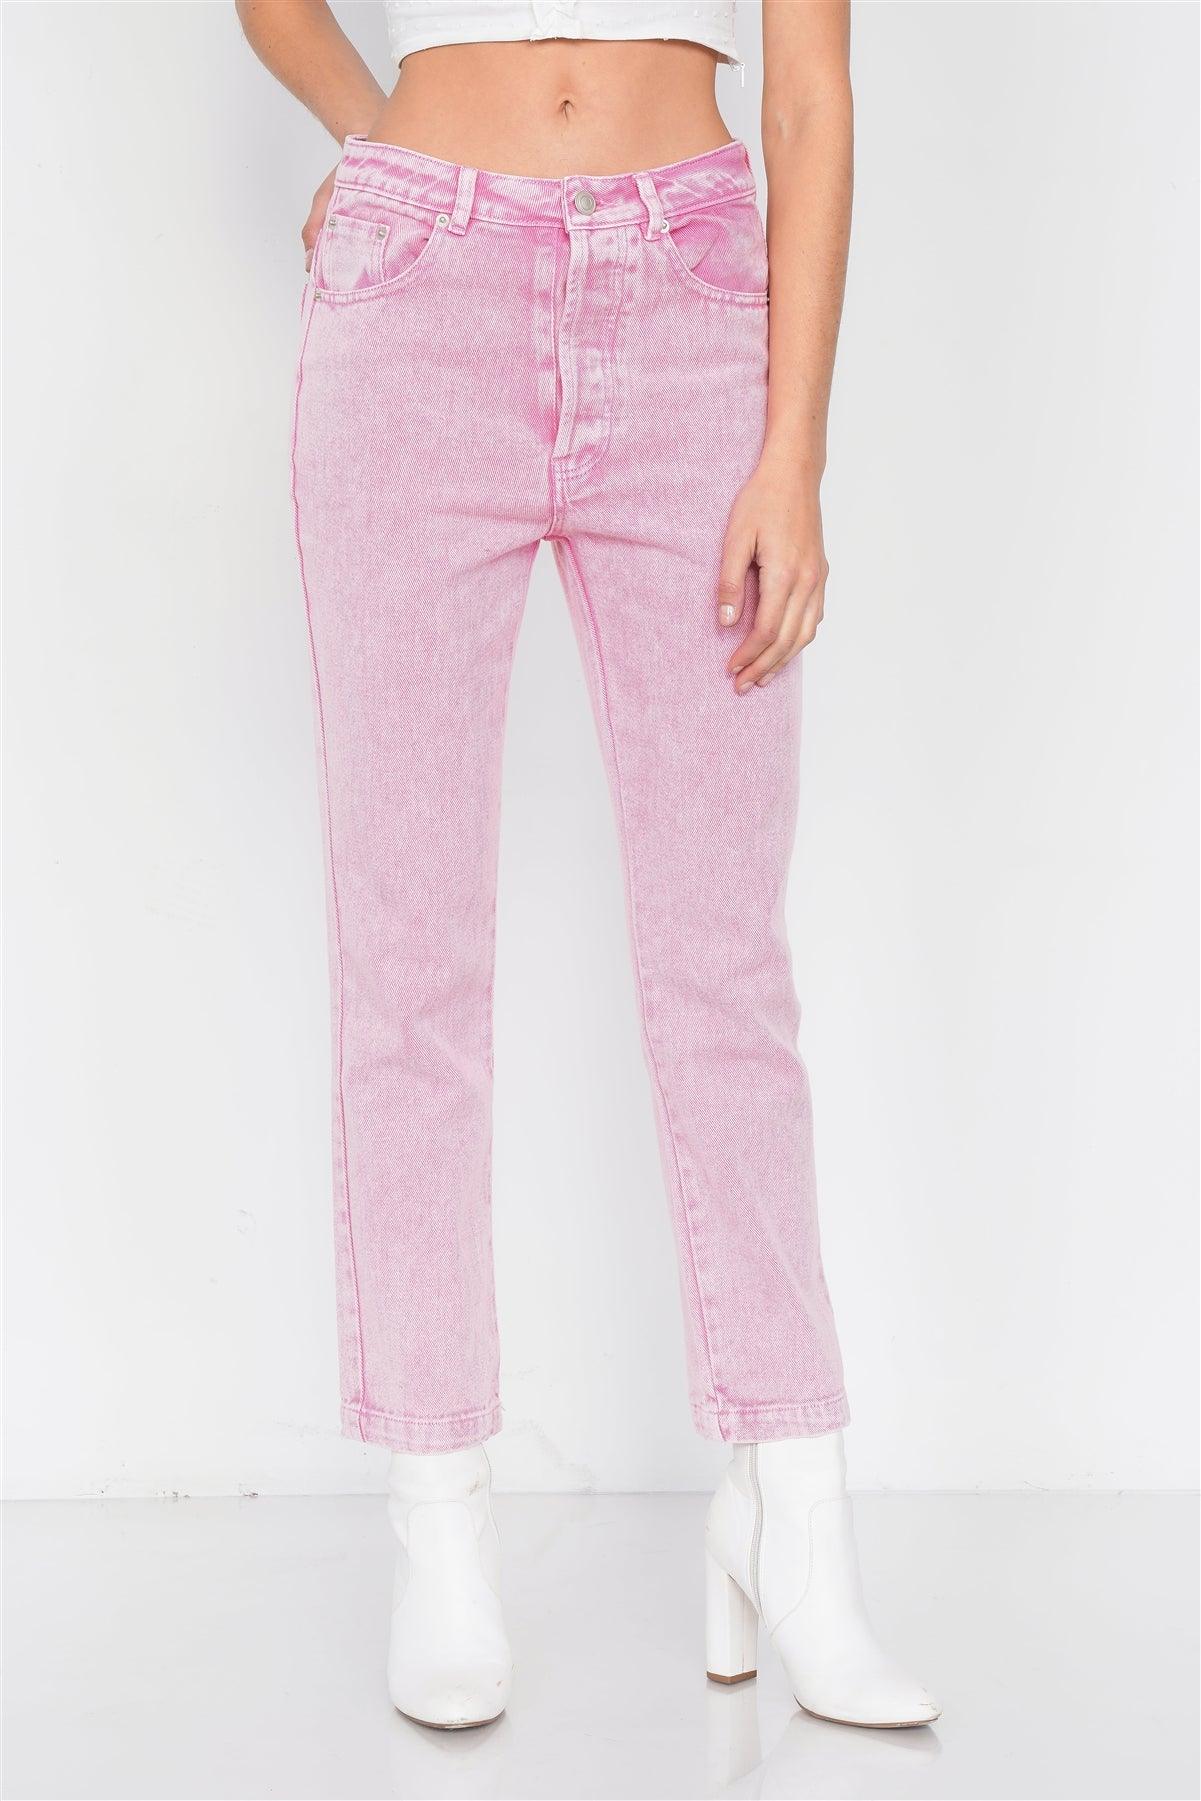 Pink Cotton Denim Acid Washed Boot Cut Jeans  /3-2-1